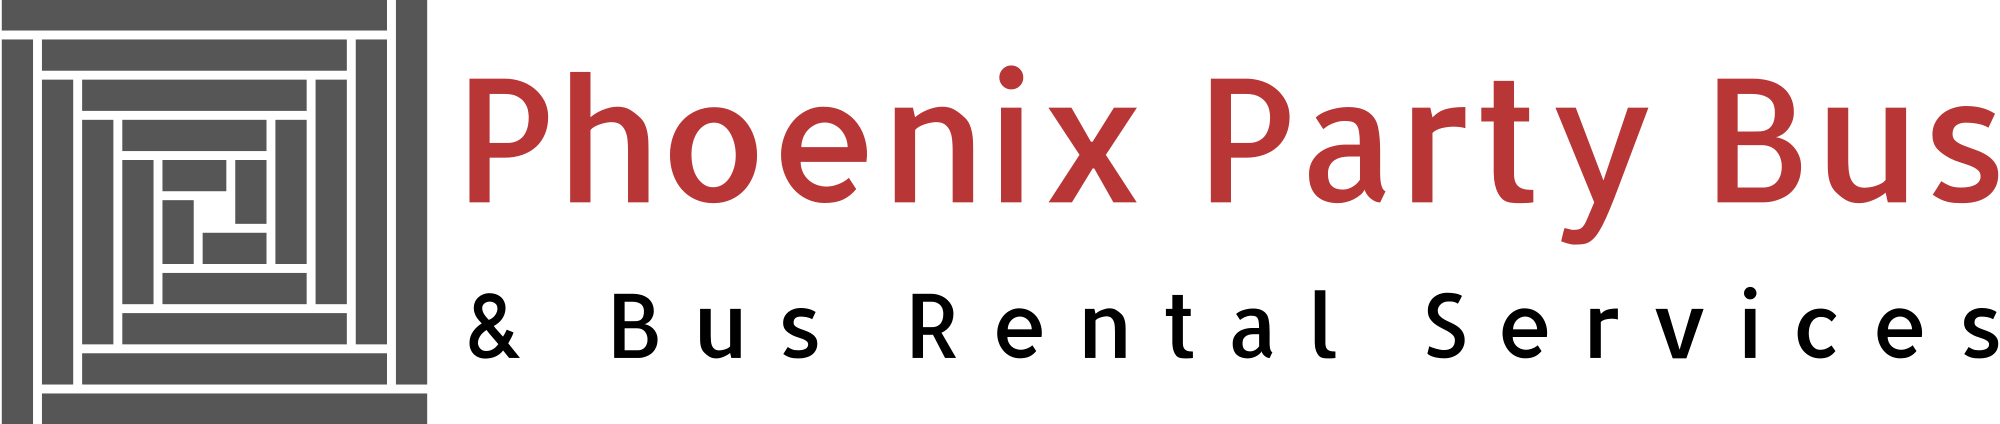 Party Bus Phoenix logo